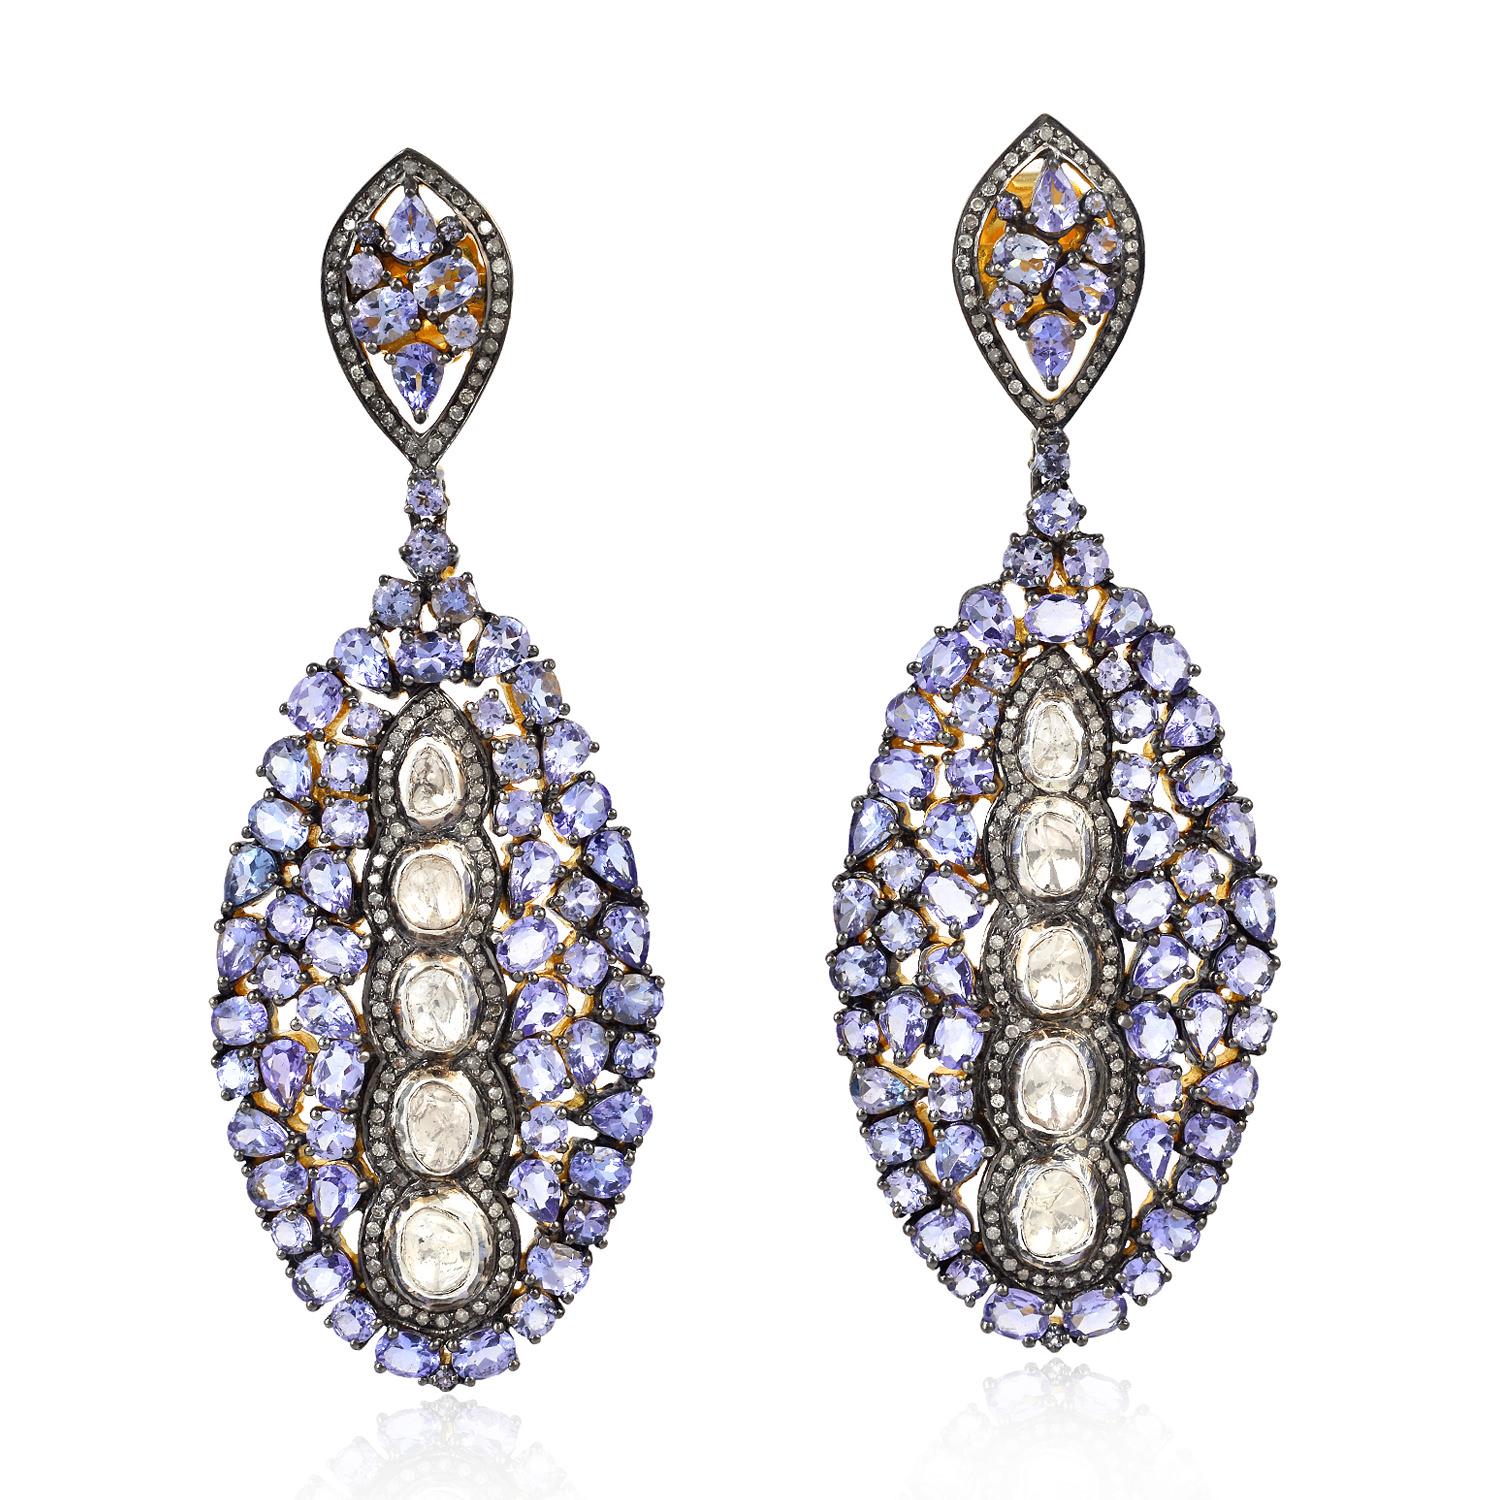 Mixed Cut 16.91 Carat Tanzanite Diamond Earrings For Sale